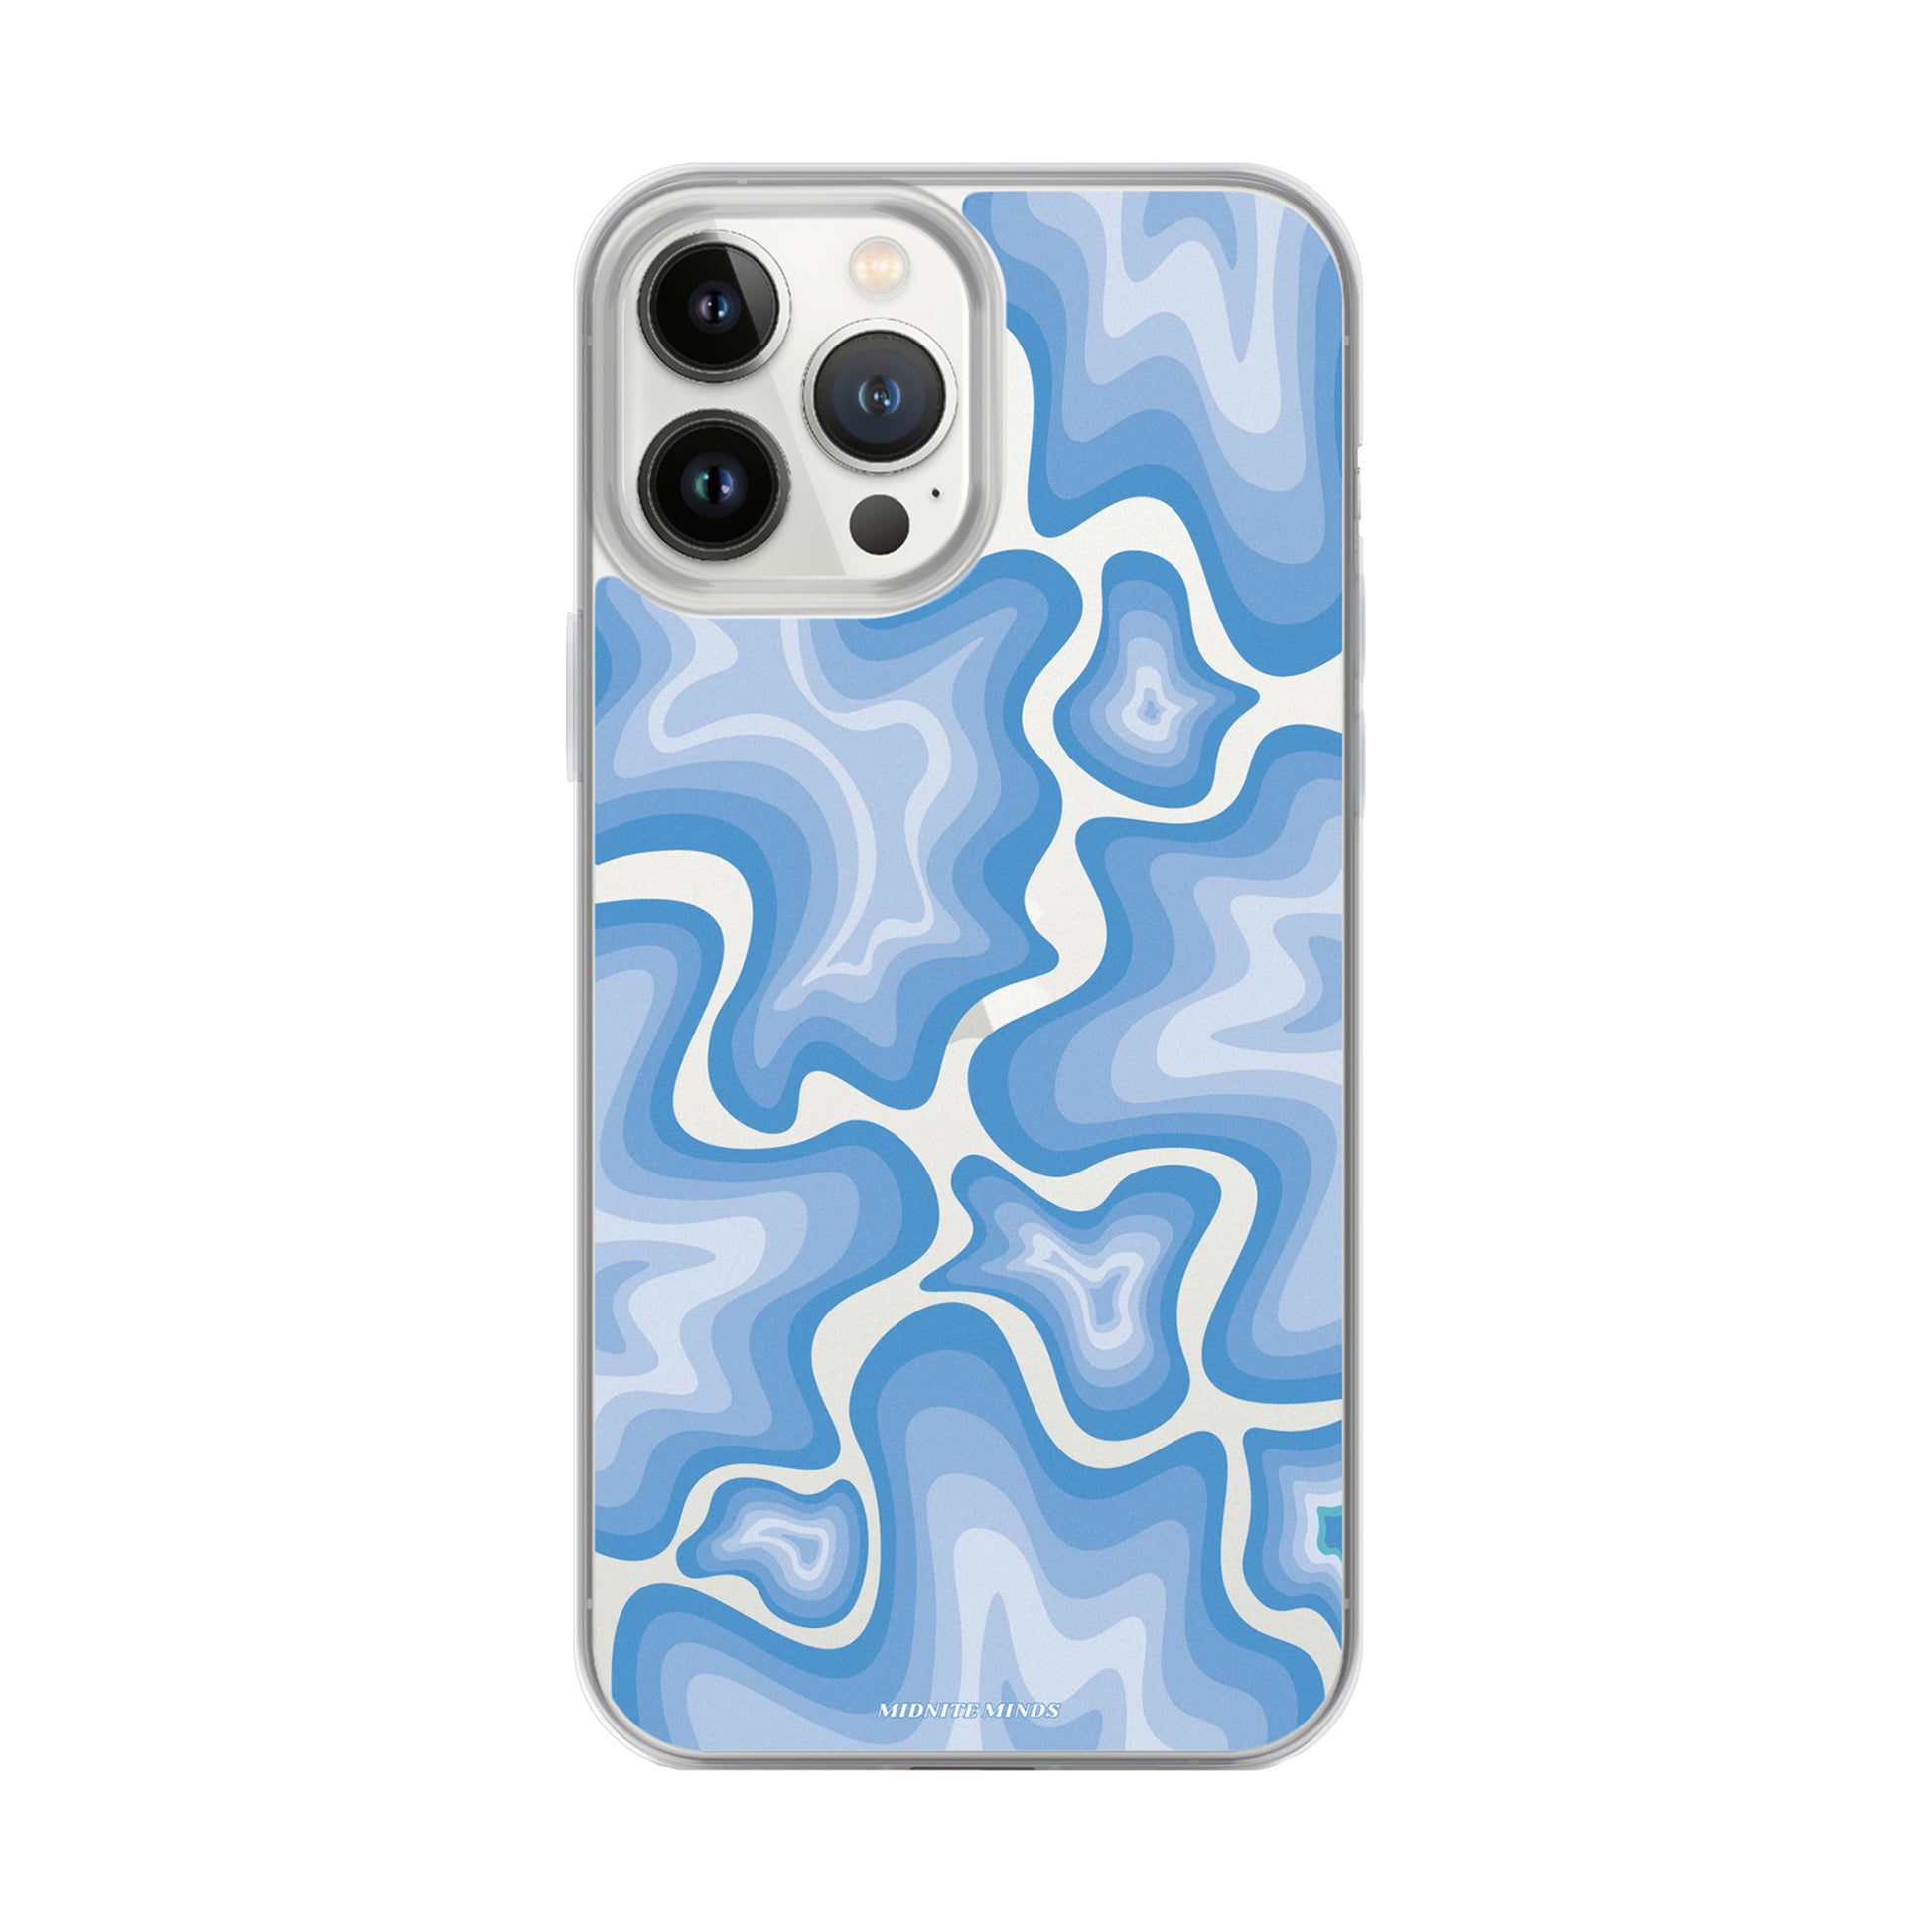 sky ripple iphone case, blue swirls iphone case, blue phone case, blue aesthetic, iphone cases